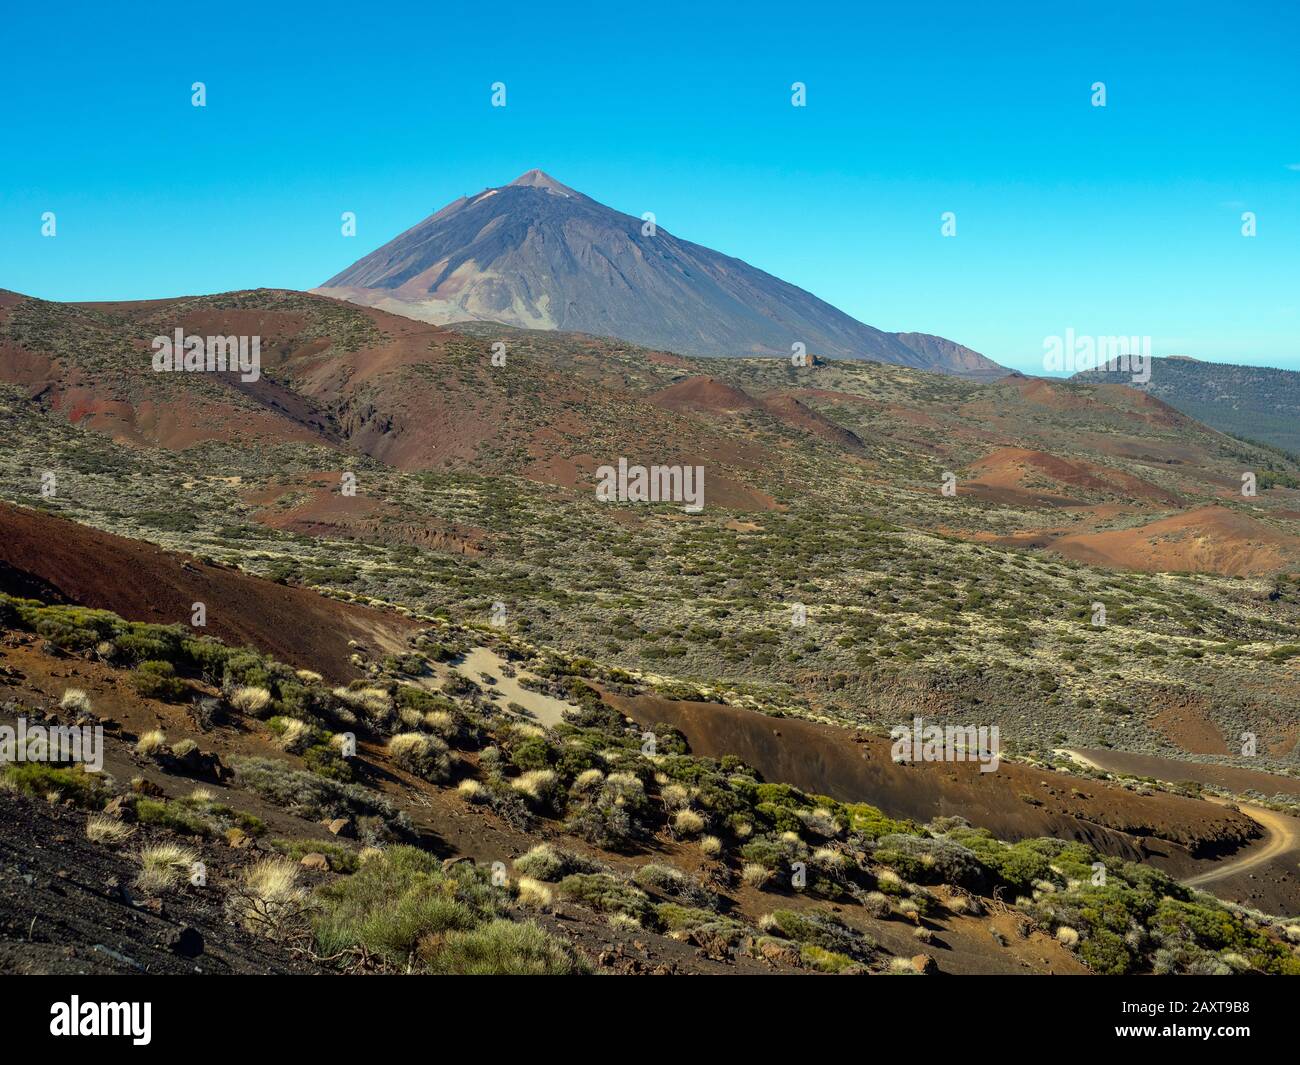 Mount Teide Spanish: El Teide, Pico del Teide,volcano on Tenerife in the Canary Islands, Spain Stock Photo